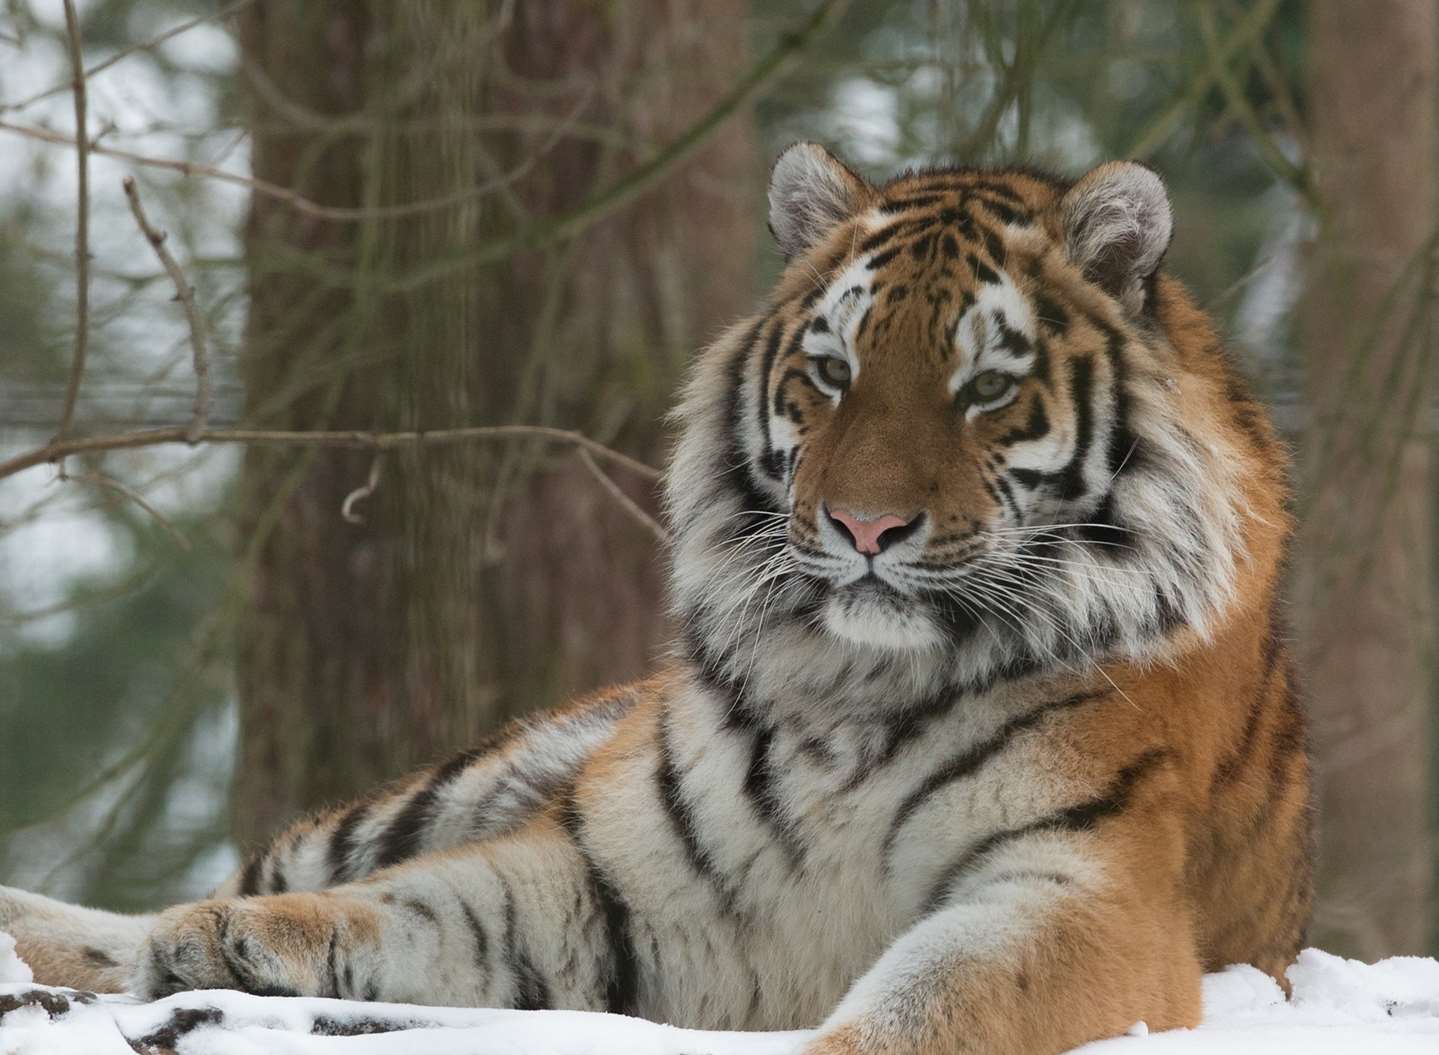 An Amur tiger at Port Lympne Reserve